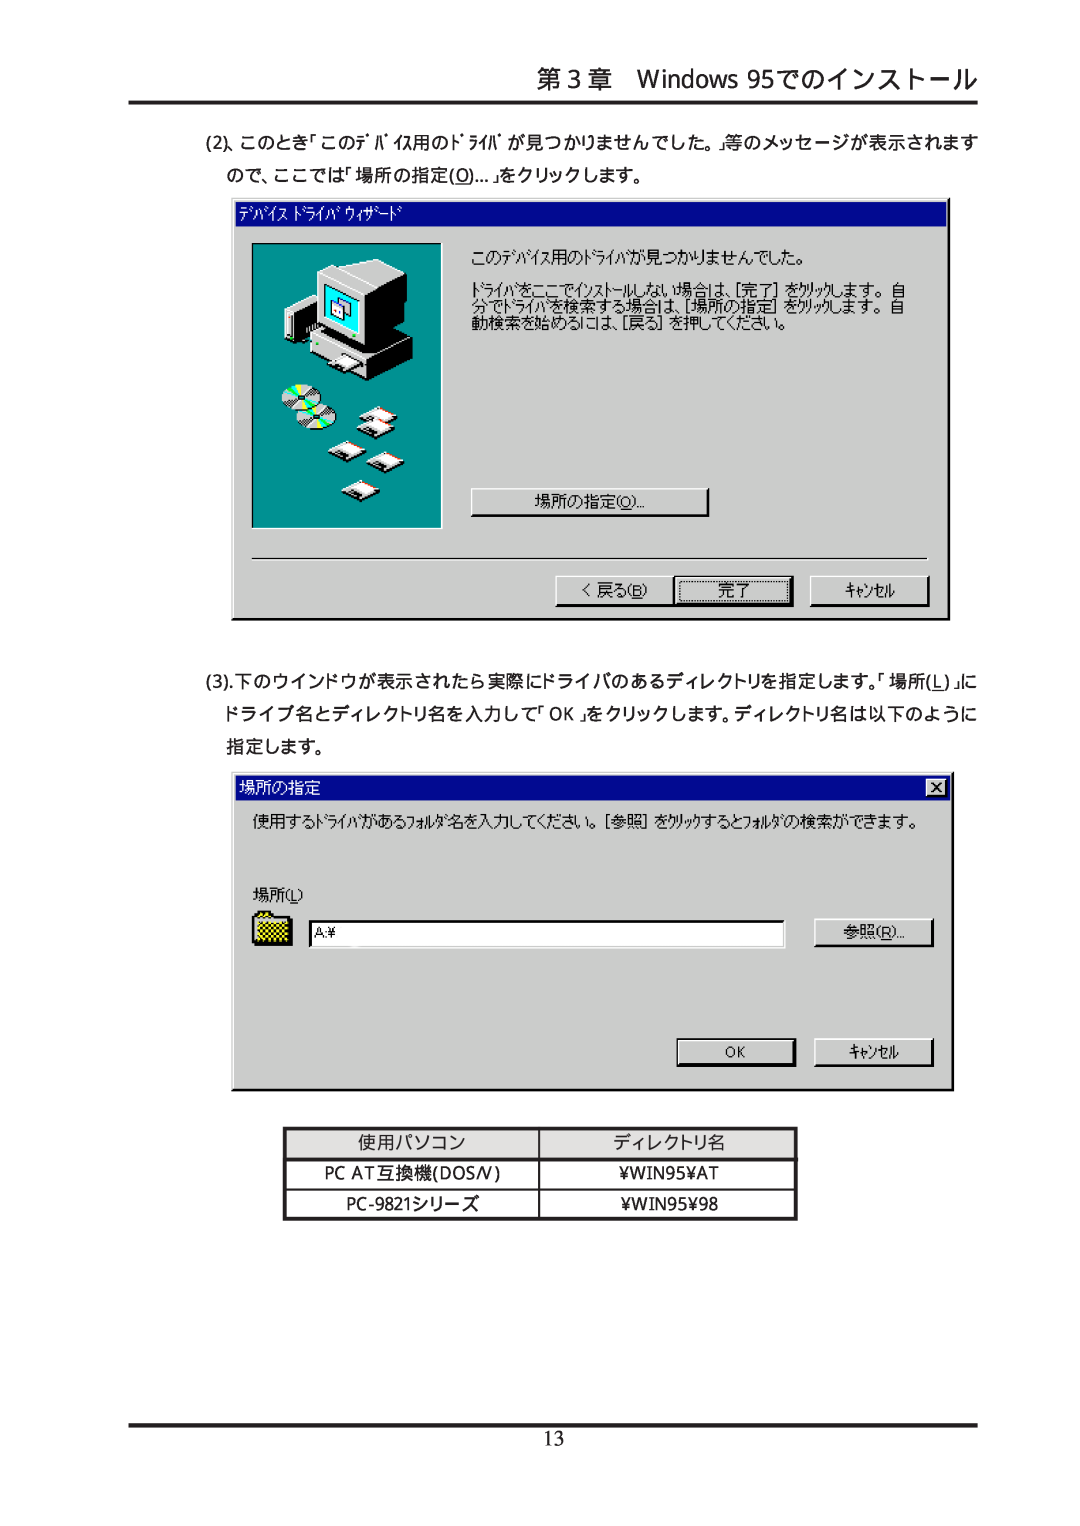 Ratoc Systems REX-R280 manual 第３章 Windows 95でのインストール, Pc At 互換機dos/V, ¥WIN95¥AT, ¥WIN95¥98, PC-9821 シリーズ 